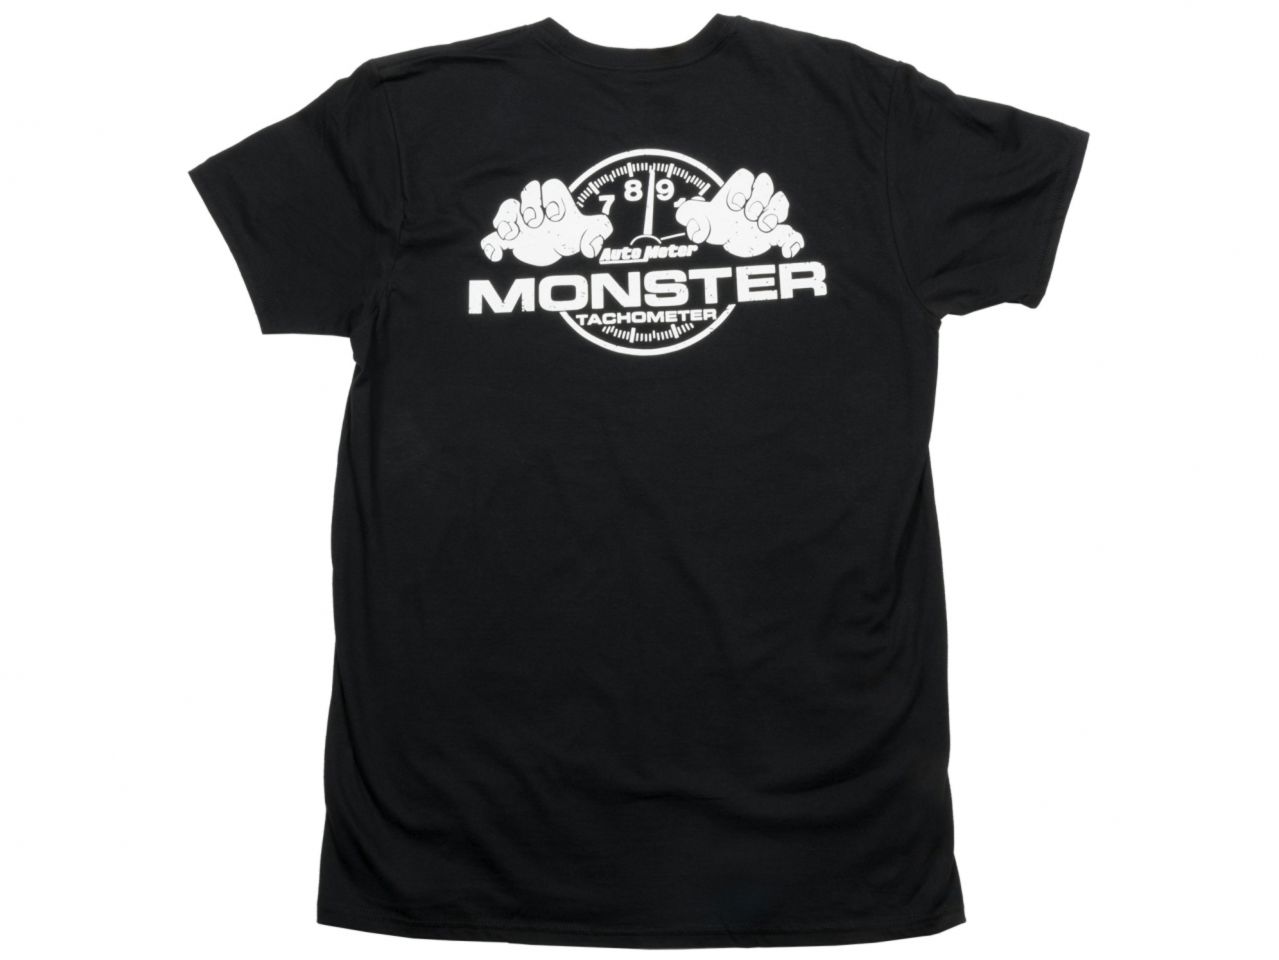 Autometer T-Shirt,Adult Large,Black,'Monster'